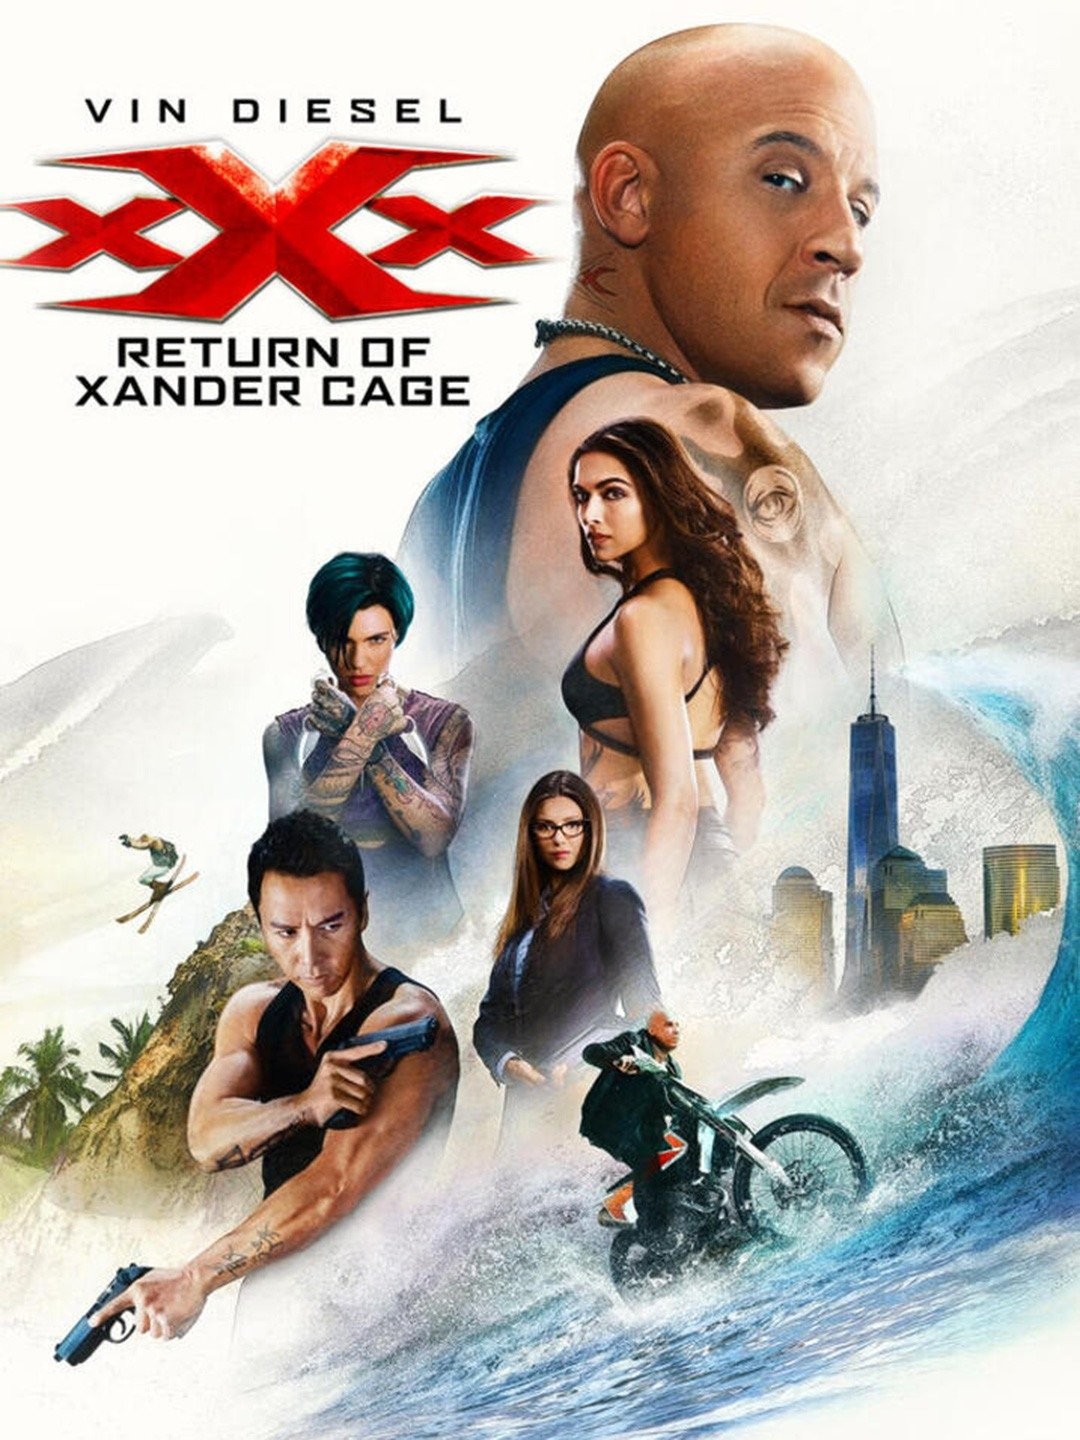 13 West Bengal School Girl Fucking - xXx: Return of Xander Cage | Rotten Tomatoes